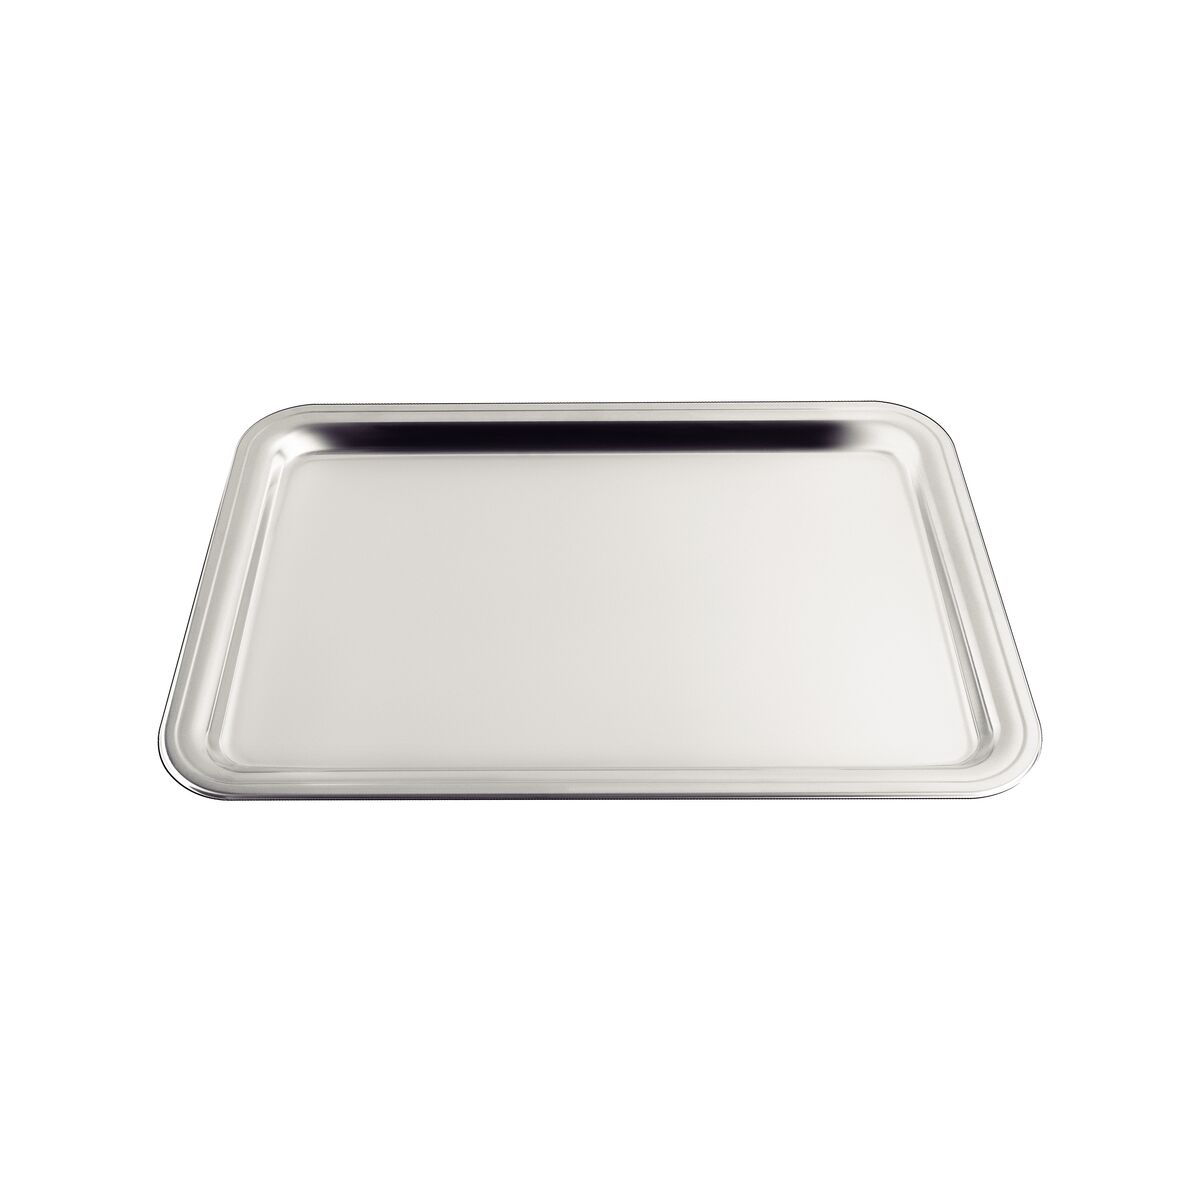 Tramontina Buena Stainless steel rectangular tray 49 x 33 cm